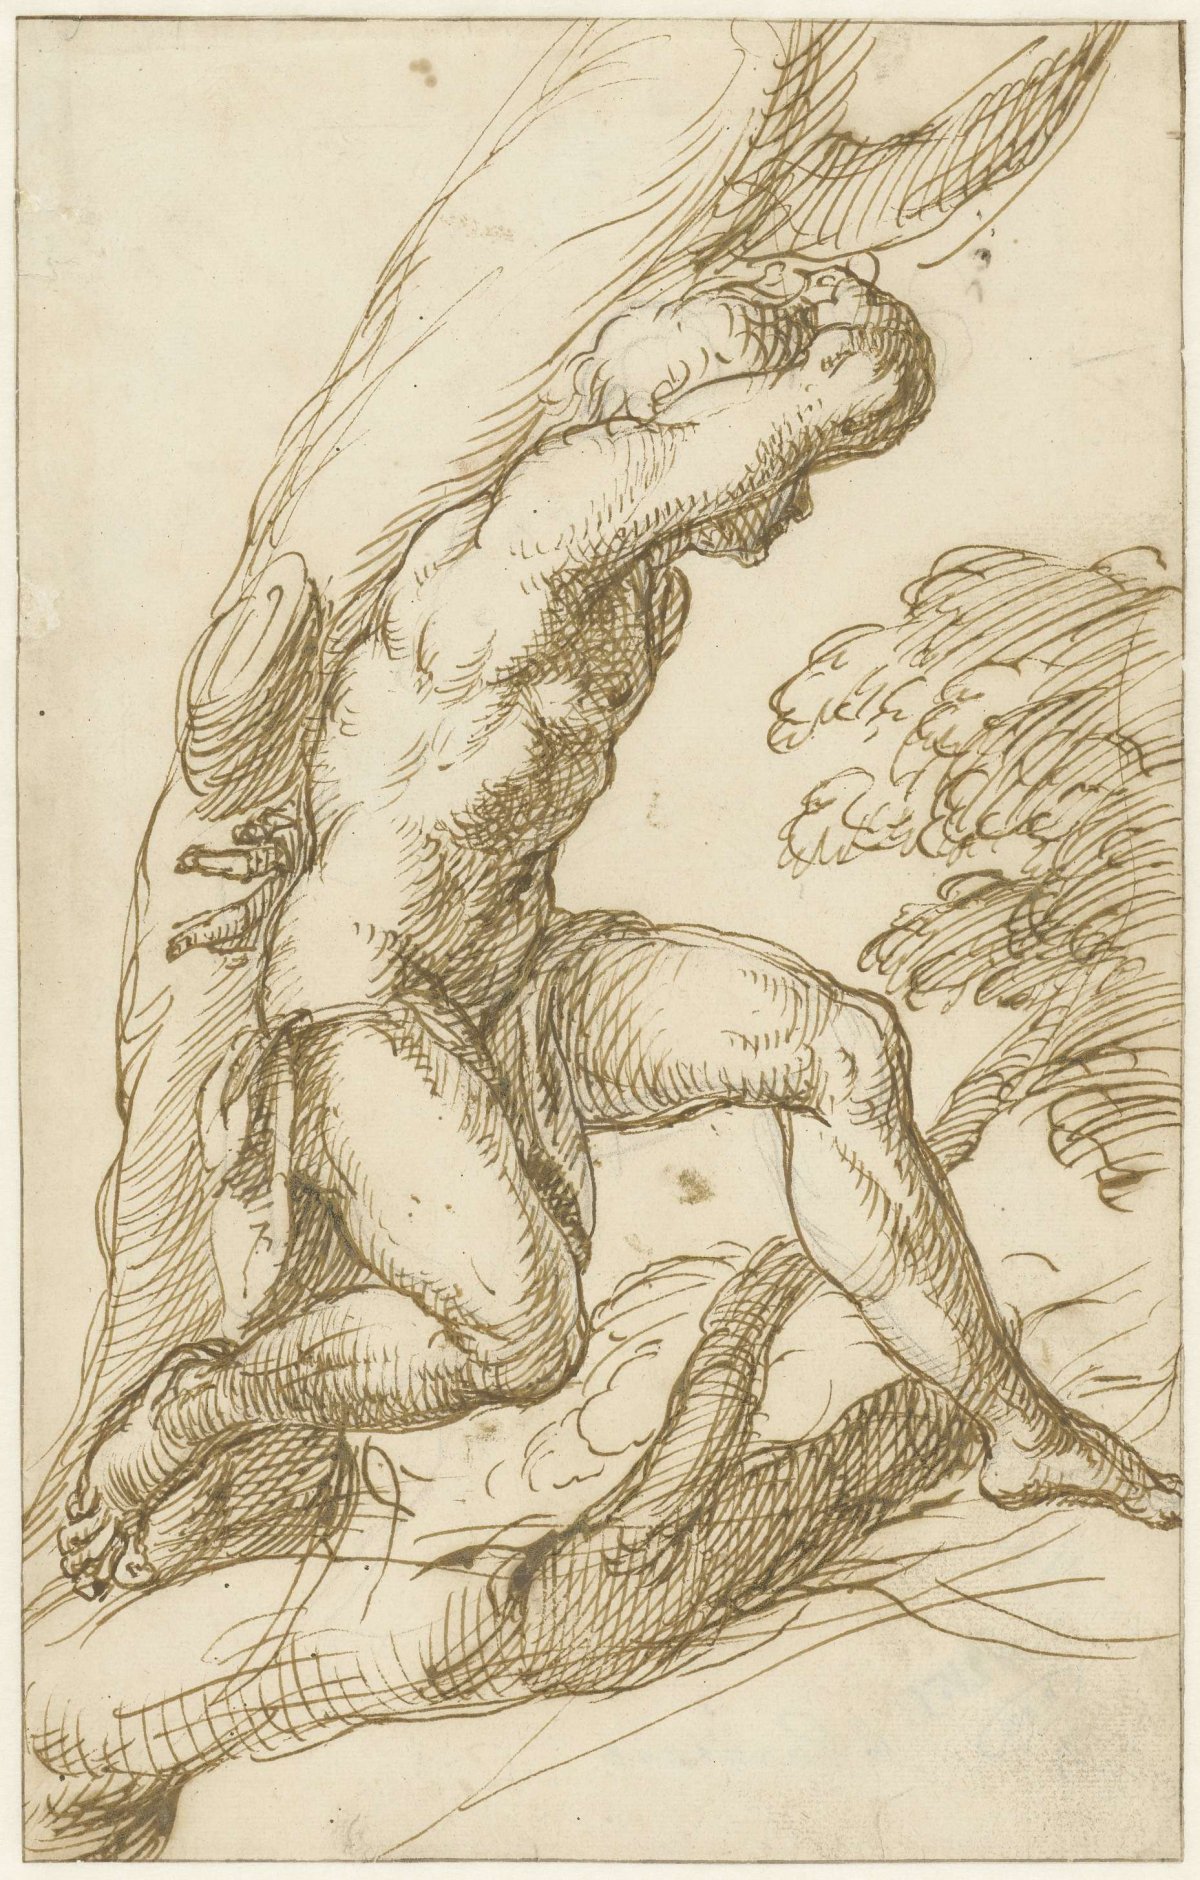 Saint Sebastian tied to a tree, A. Carracci, 1567 - 1618